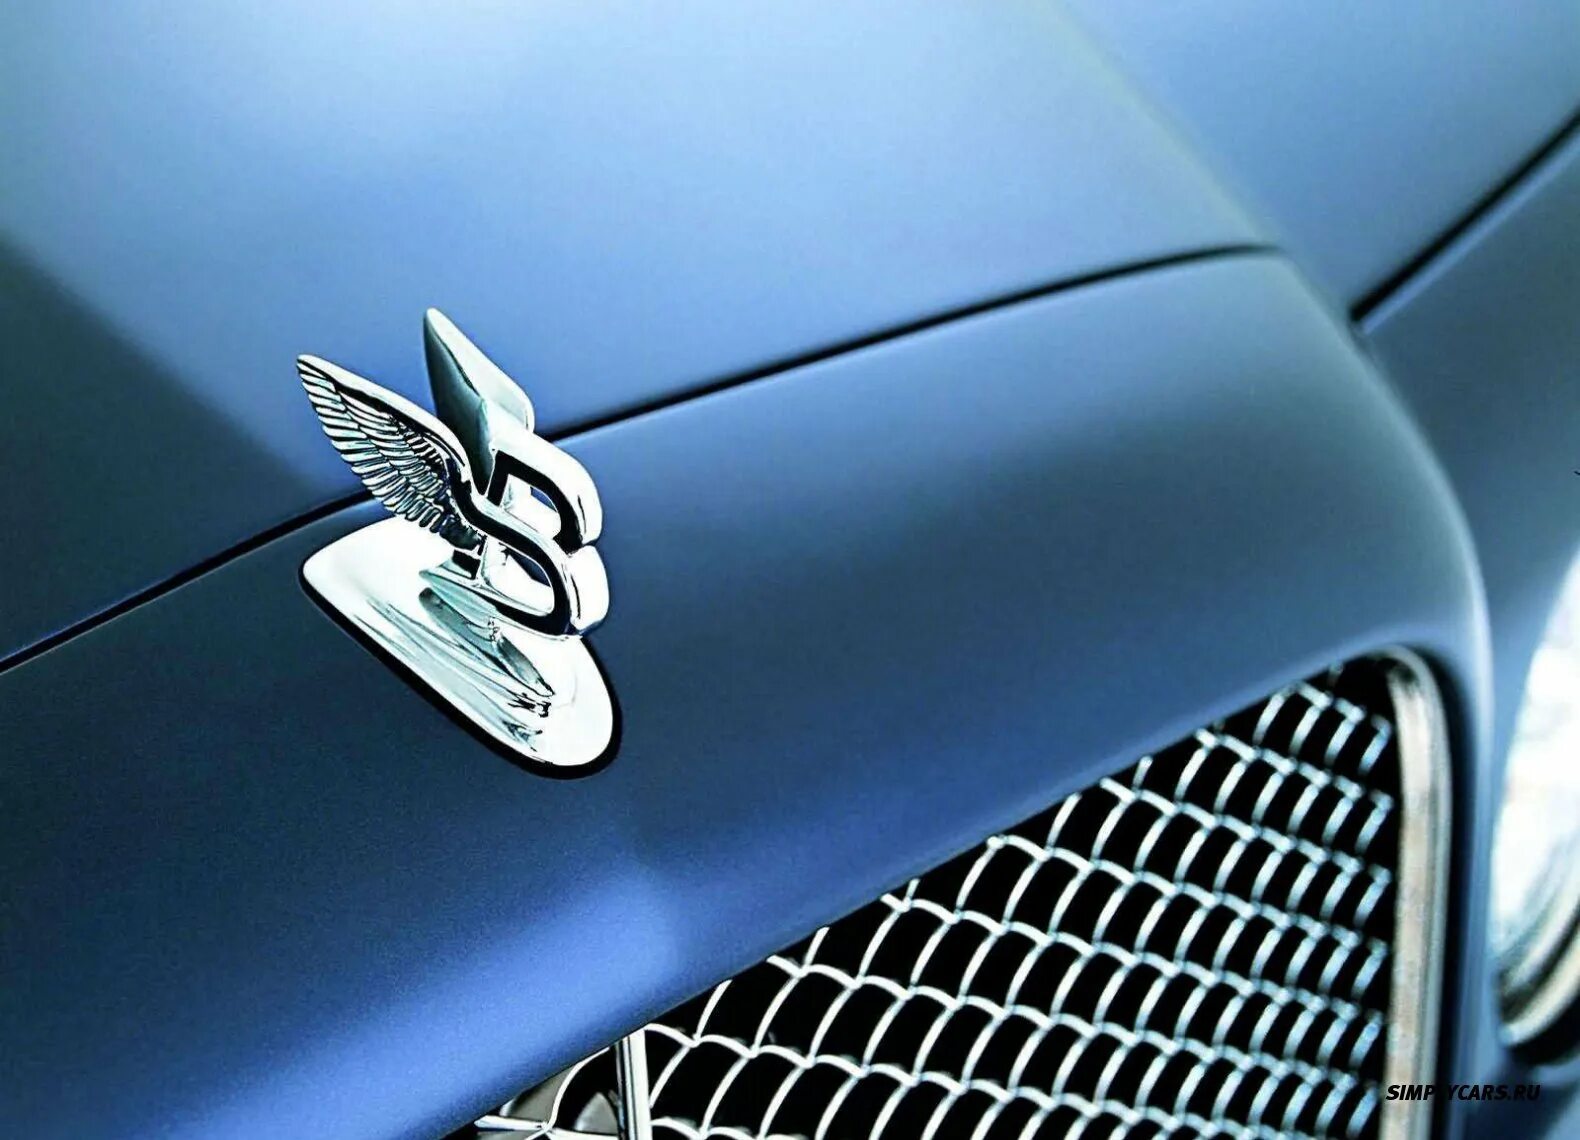 Значок на капоте. Hyundai Equus Emblem. Астон Мартин и Бентли значки. Автомобильная марка Бентли. Шильдик сборщика Бентли.